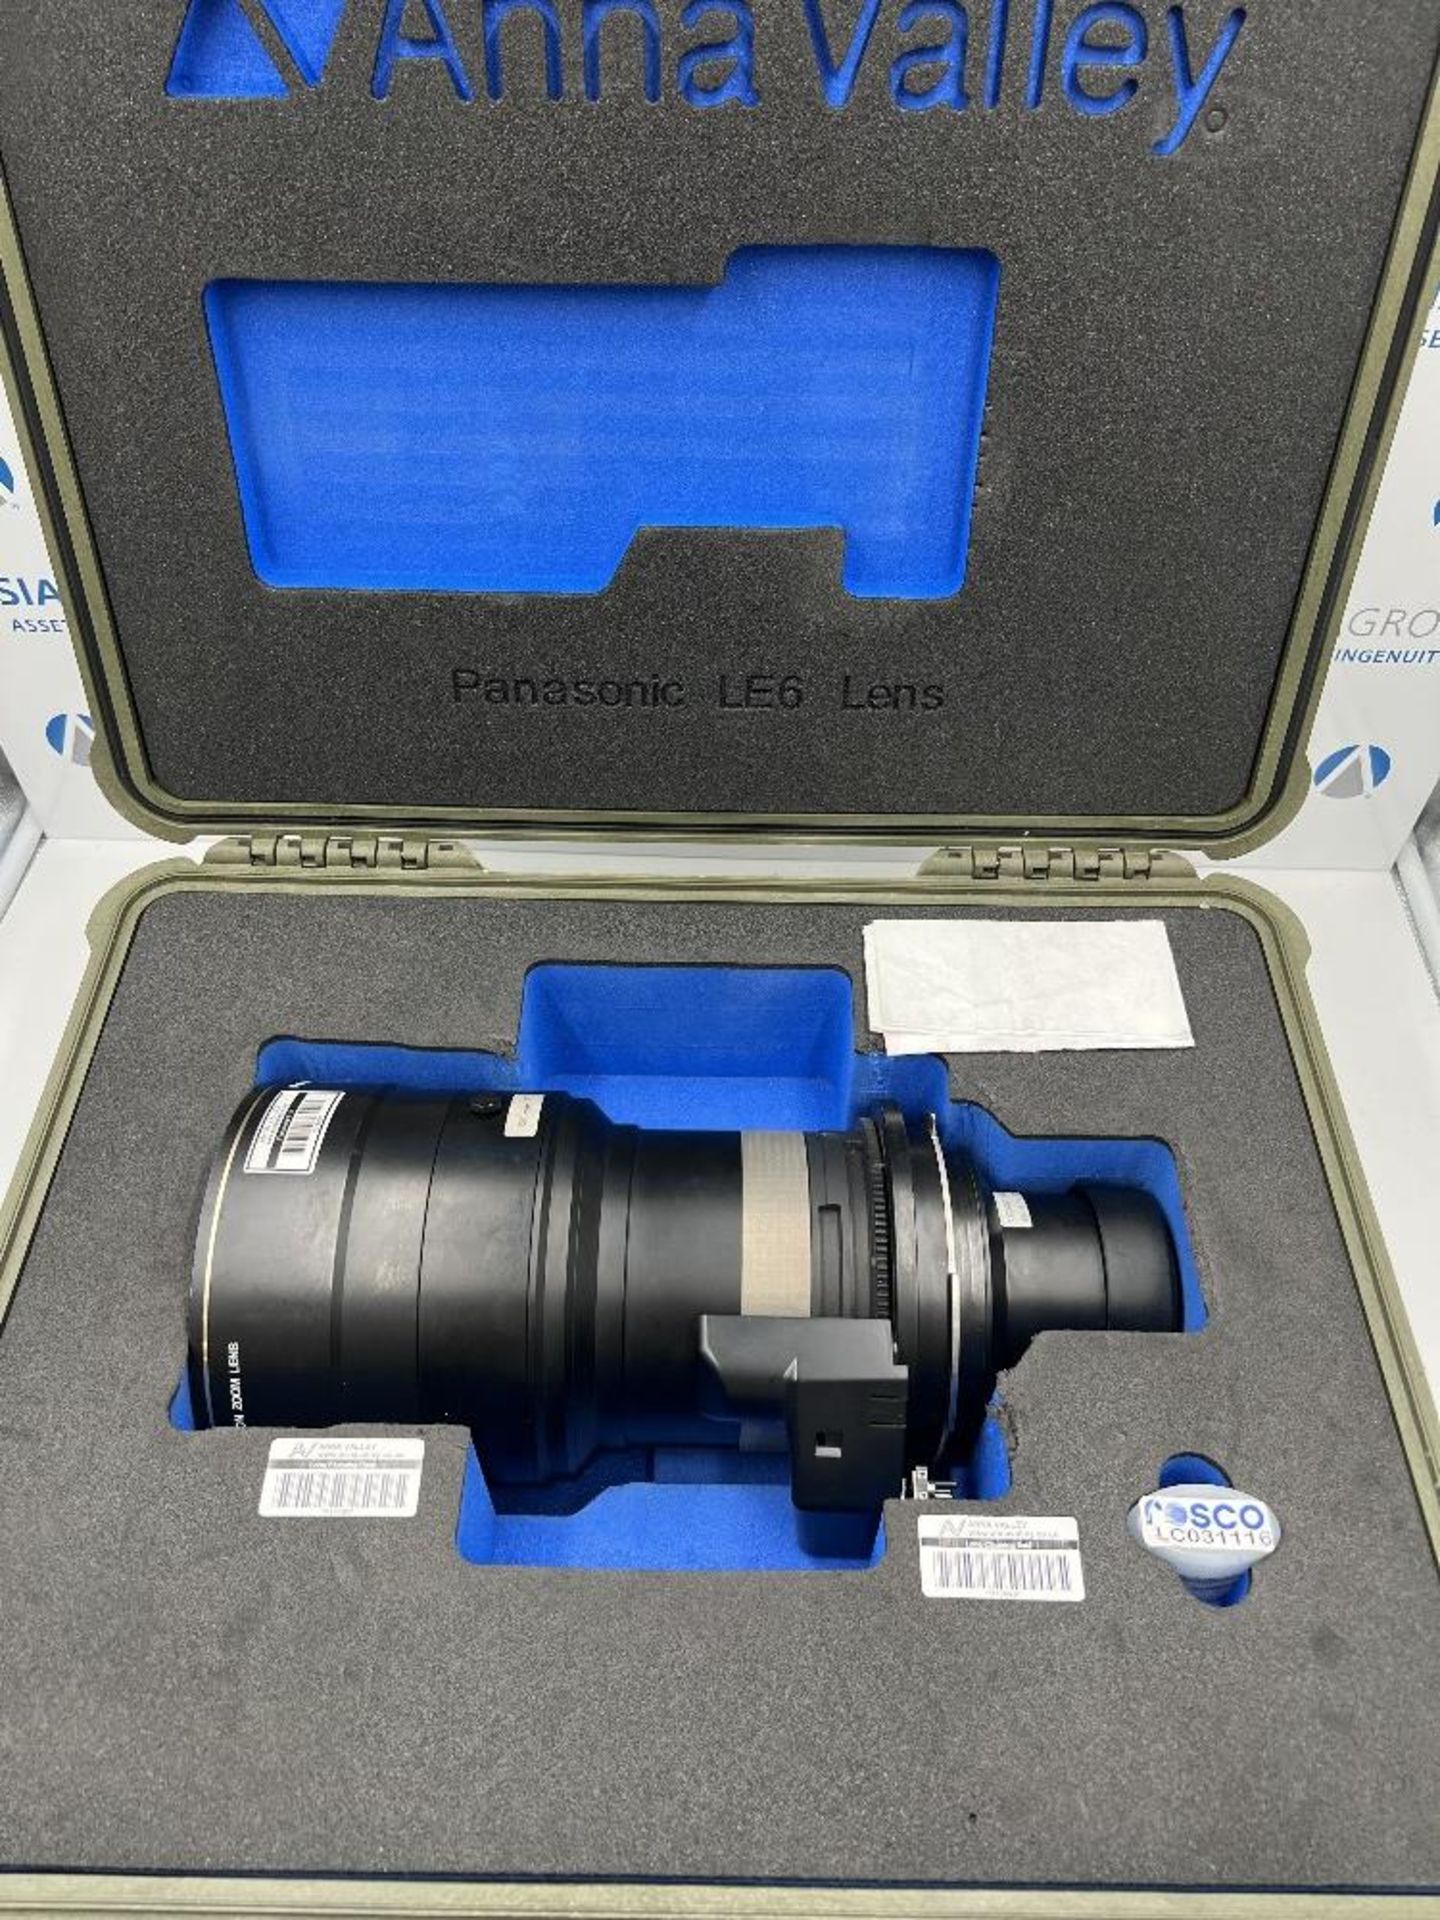 Panasonic ET-D75LE6 0.9-1.1 Zoom Lens With Carrier Case - Image 7 of 8